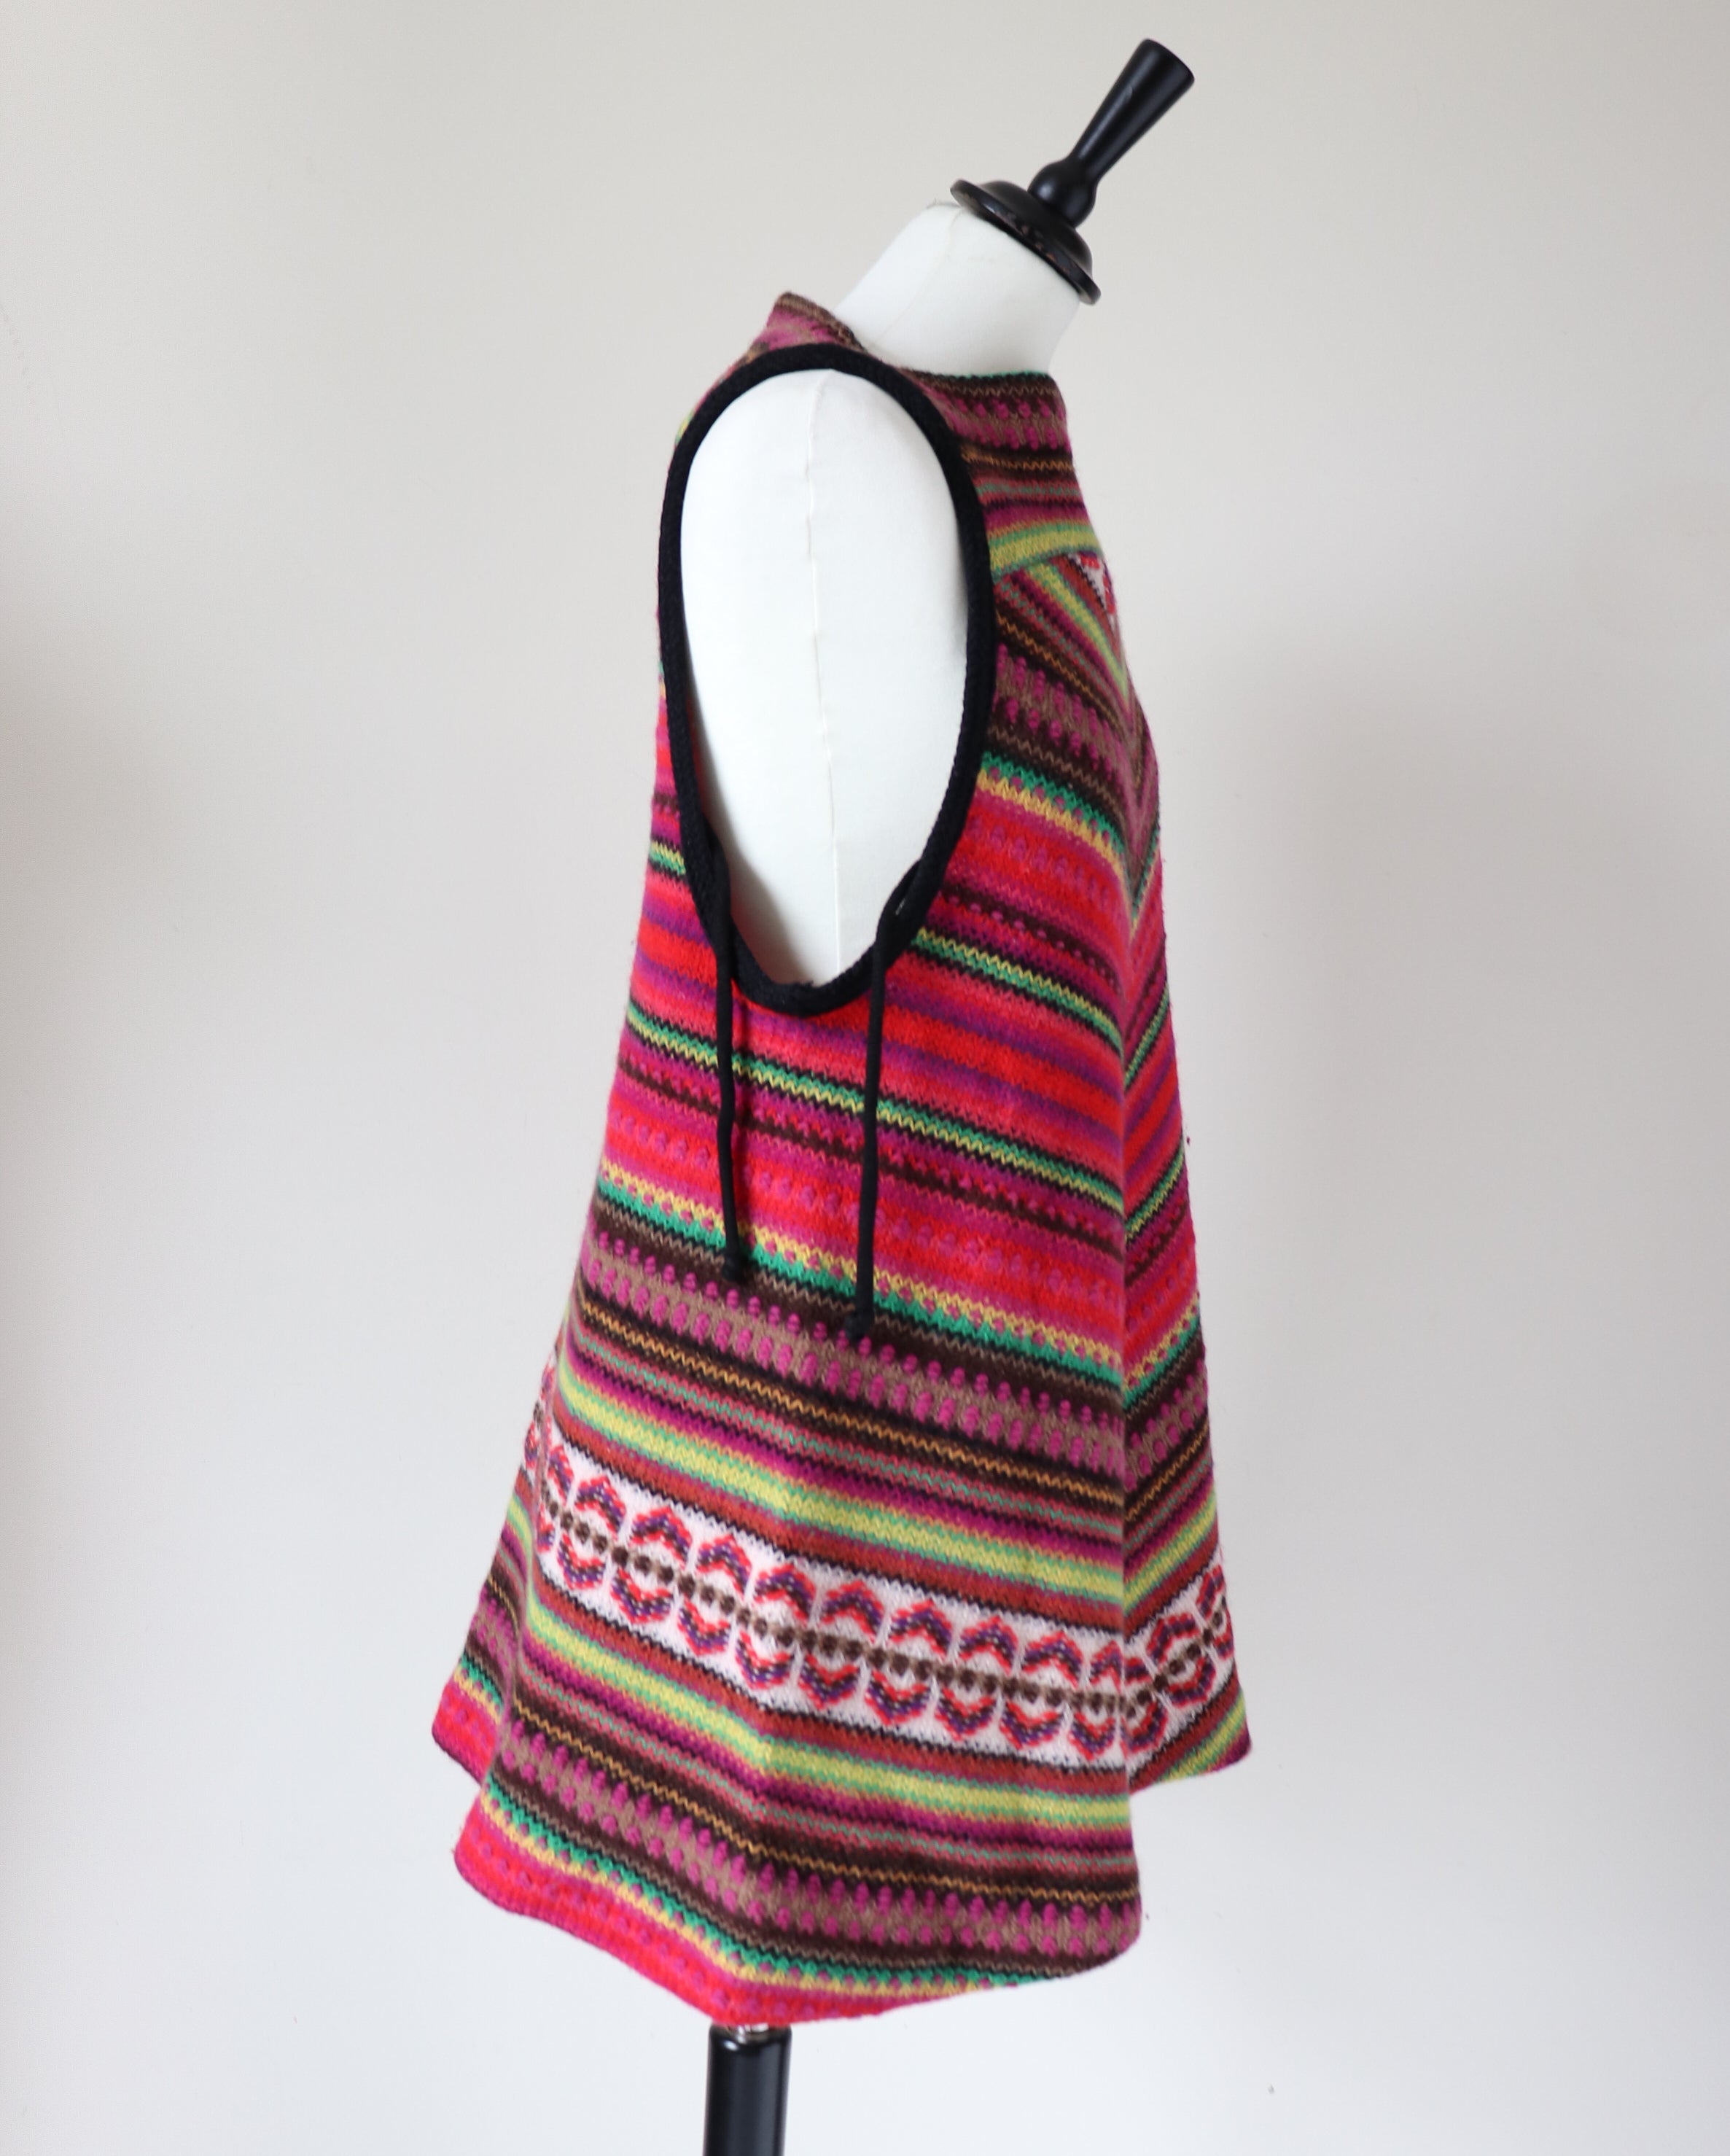 Vintage 1970s knitted tabard / tunic / dress - FairIsle - S / M - UK 10 / 12